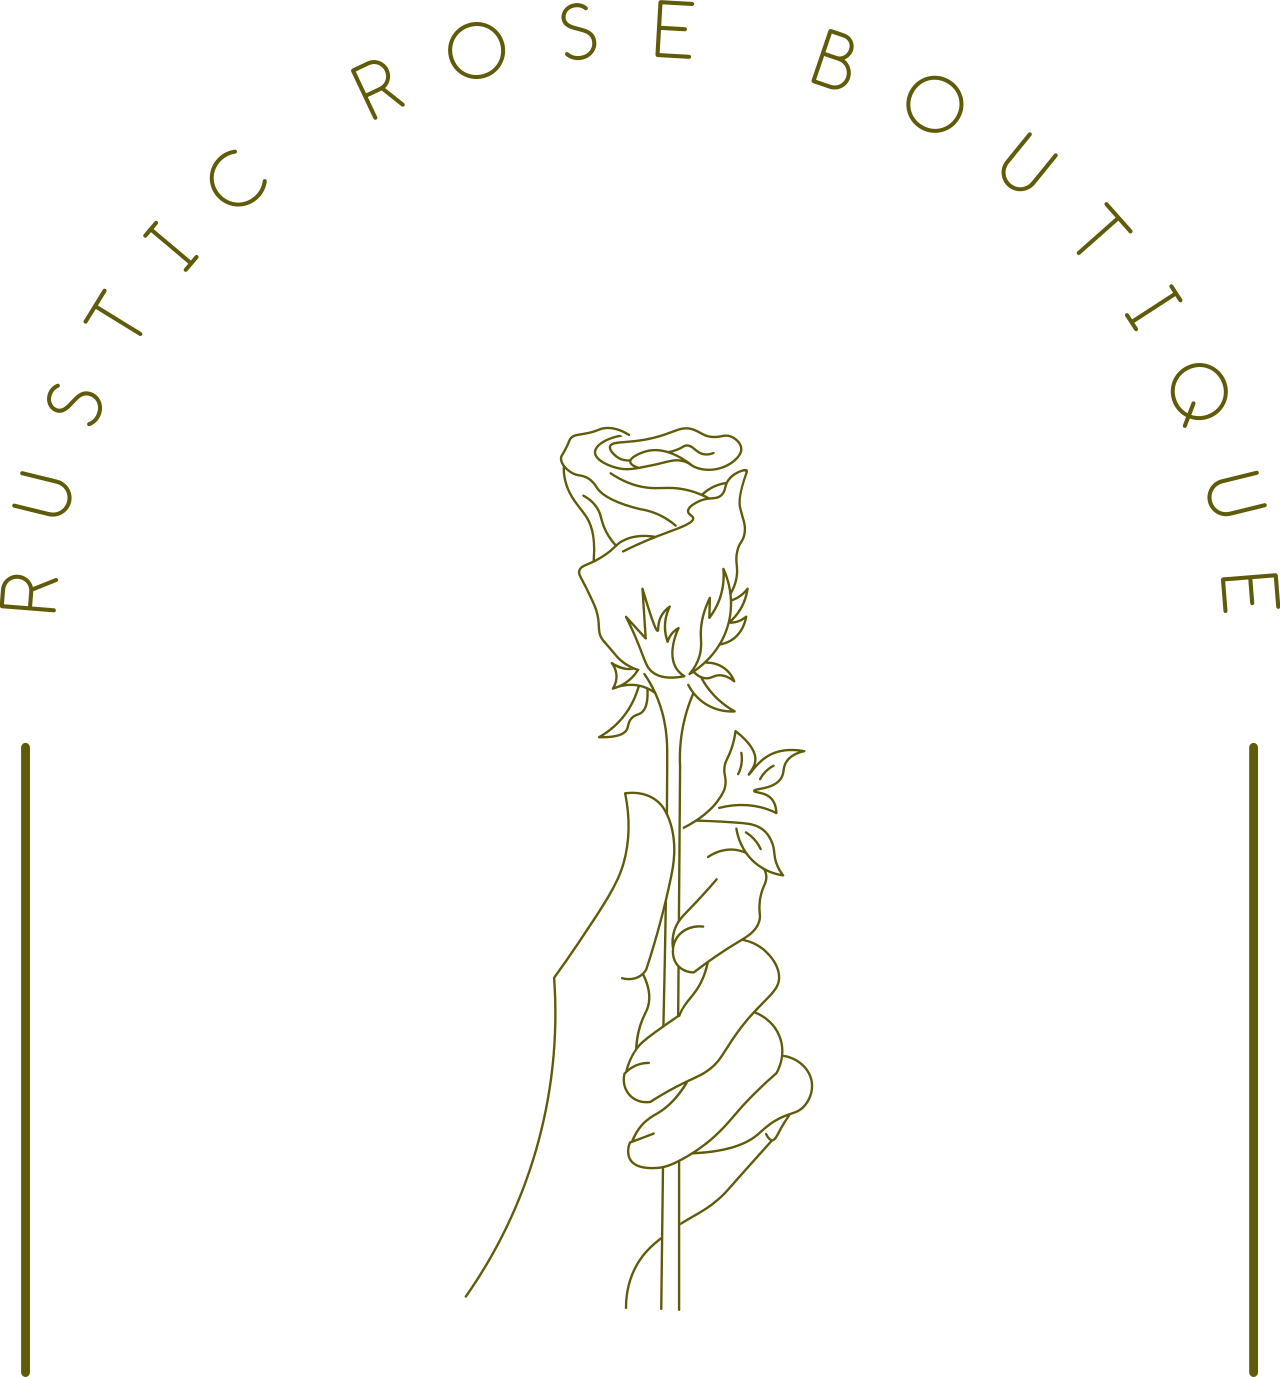 RUSTIC ROSE BOUTIQUE's web page